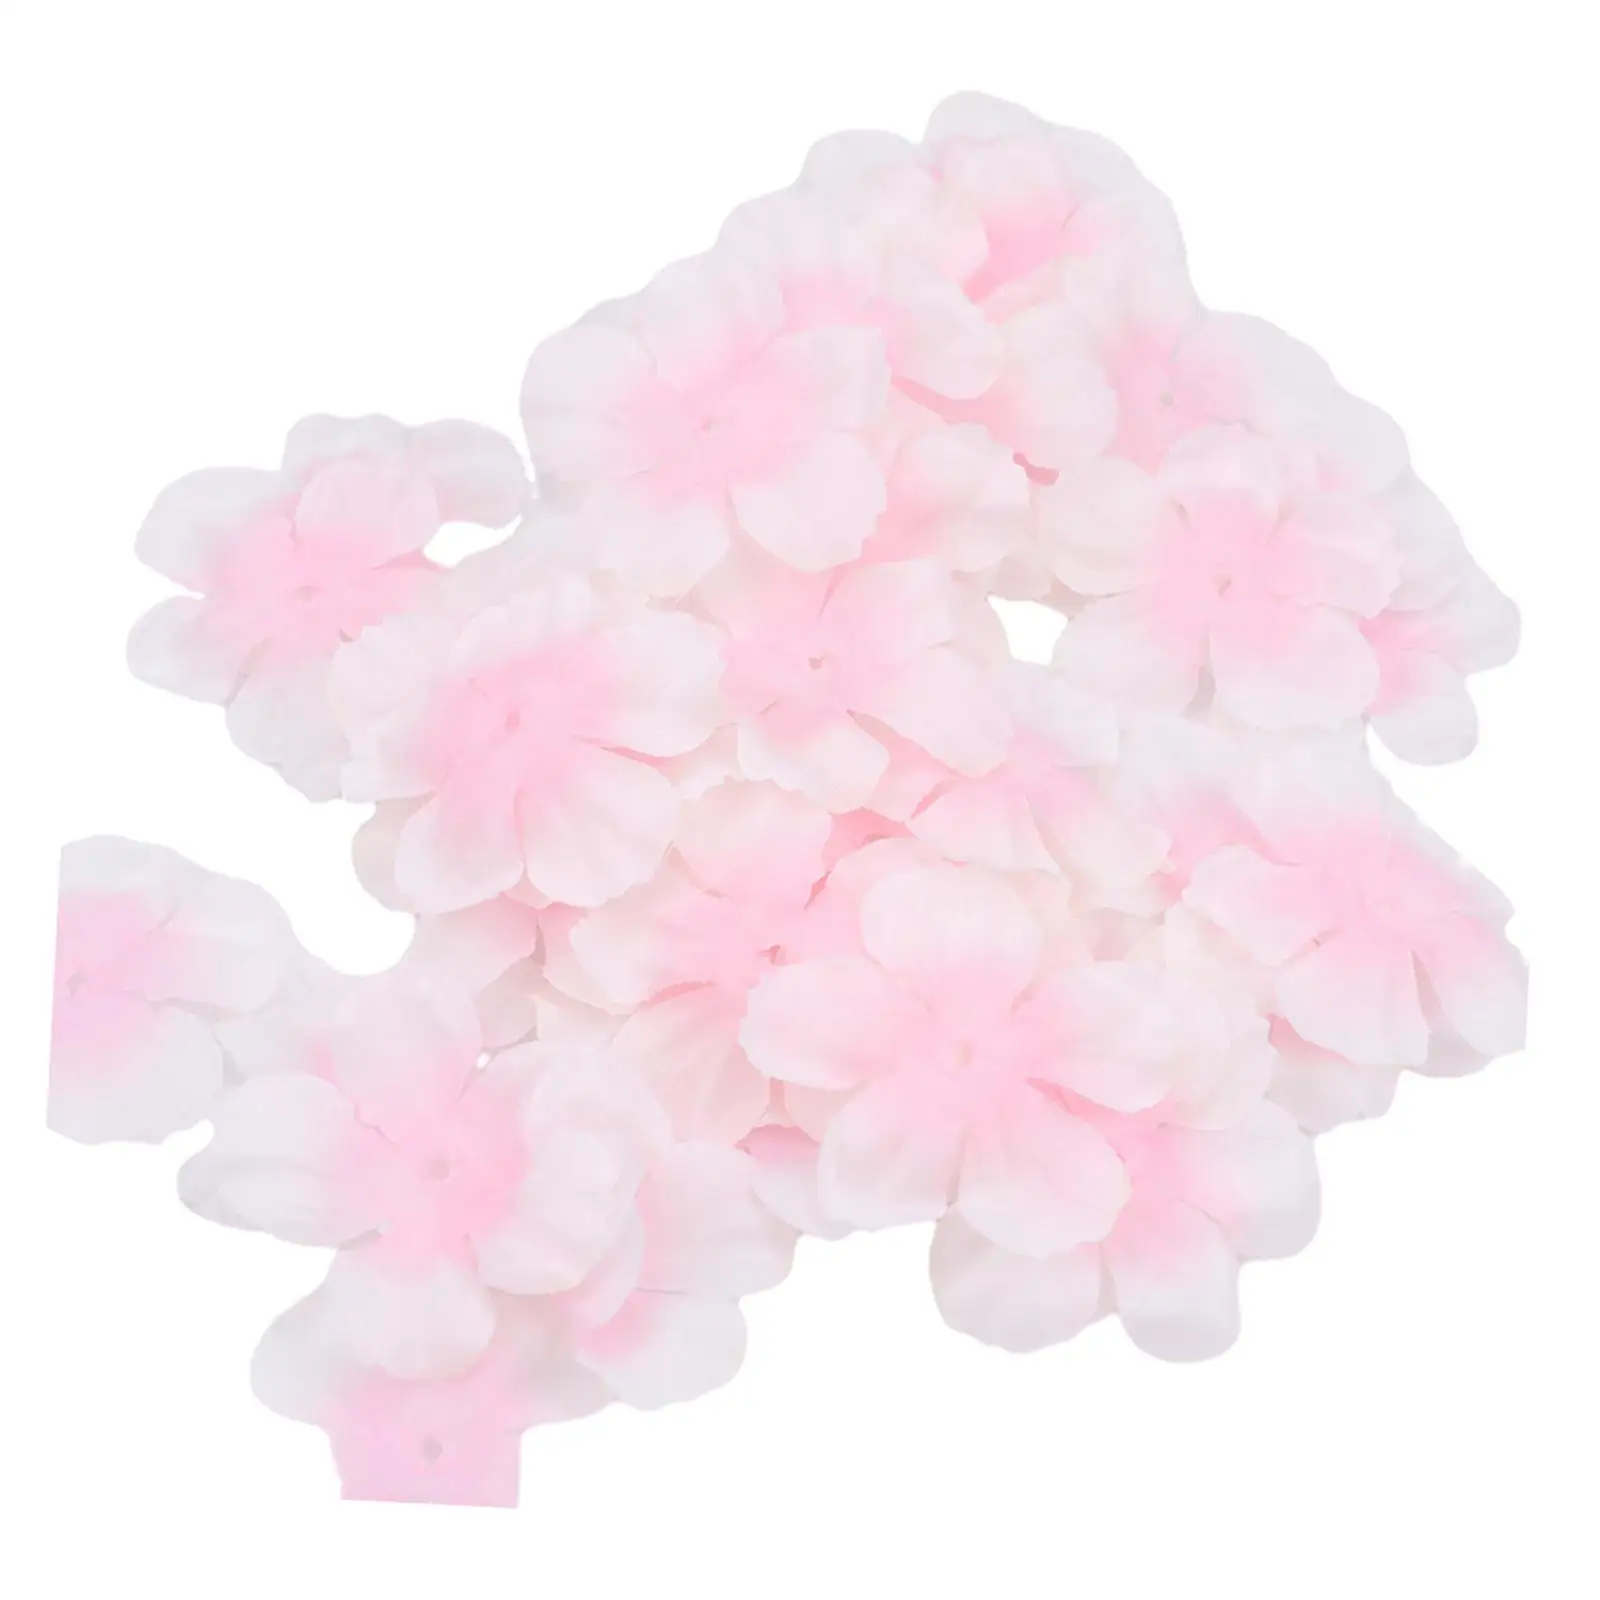 500x Flower Petals Romantic DIY Materials Handmade Artificial Fake Silk Flower for Table Clothes Dress Party